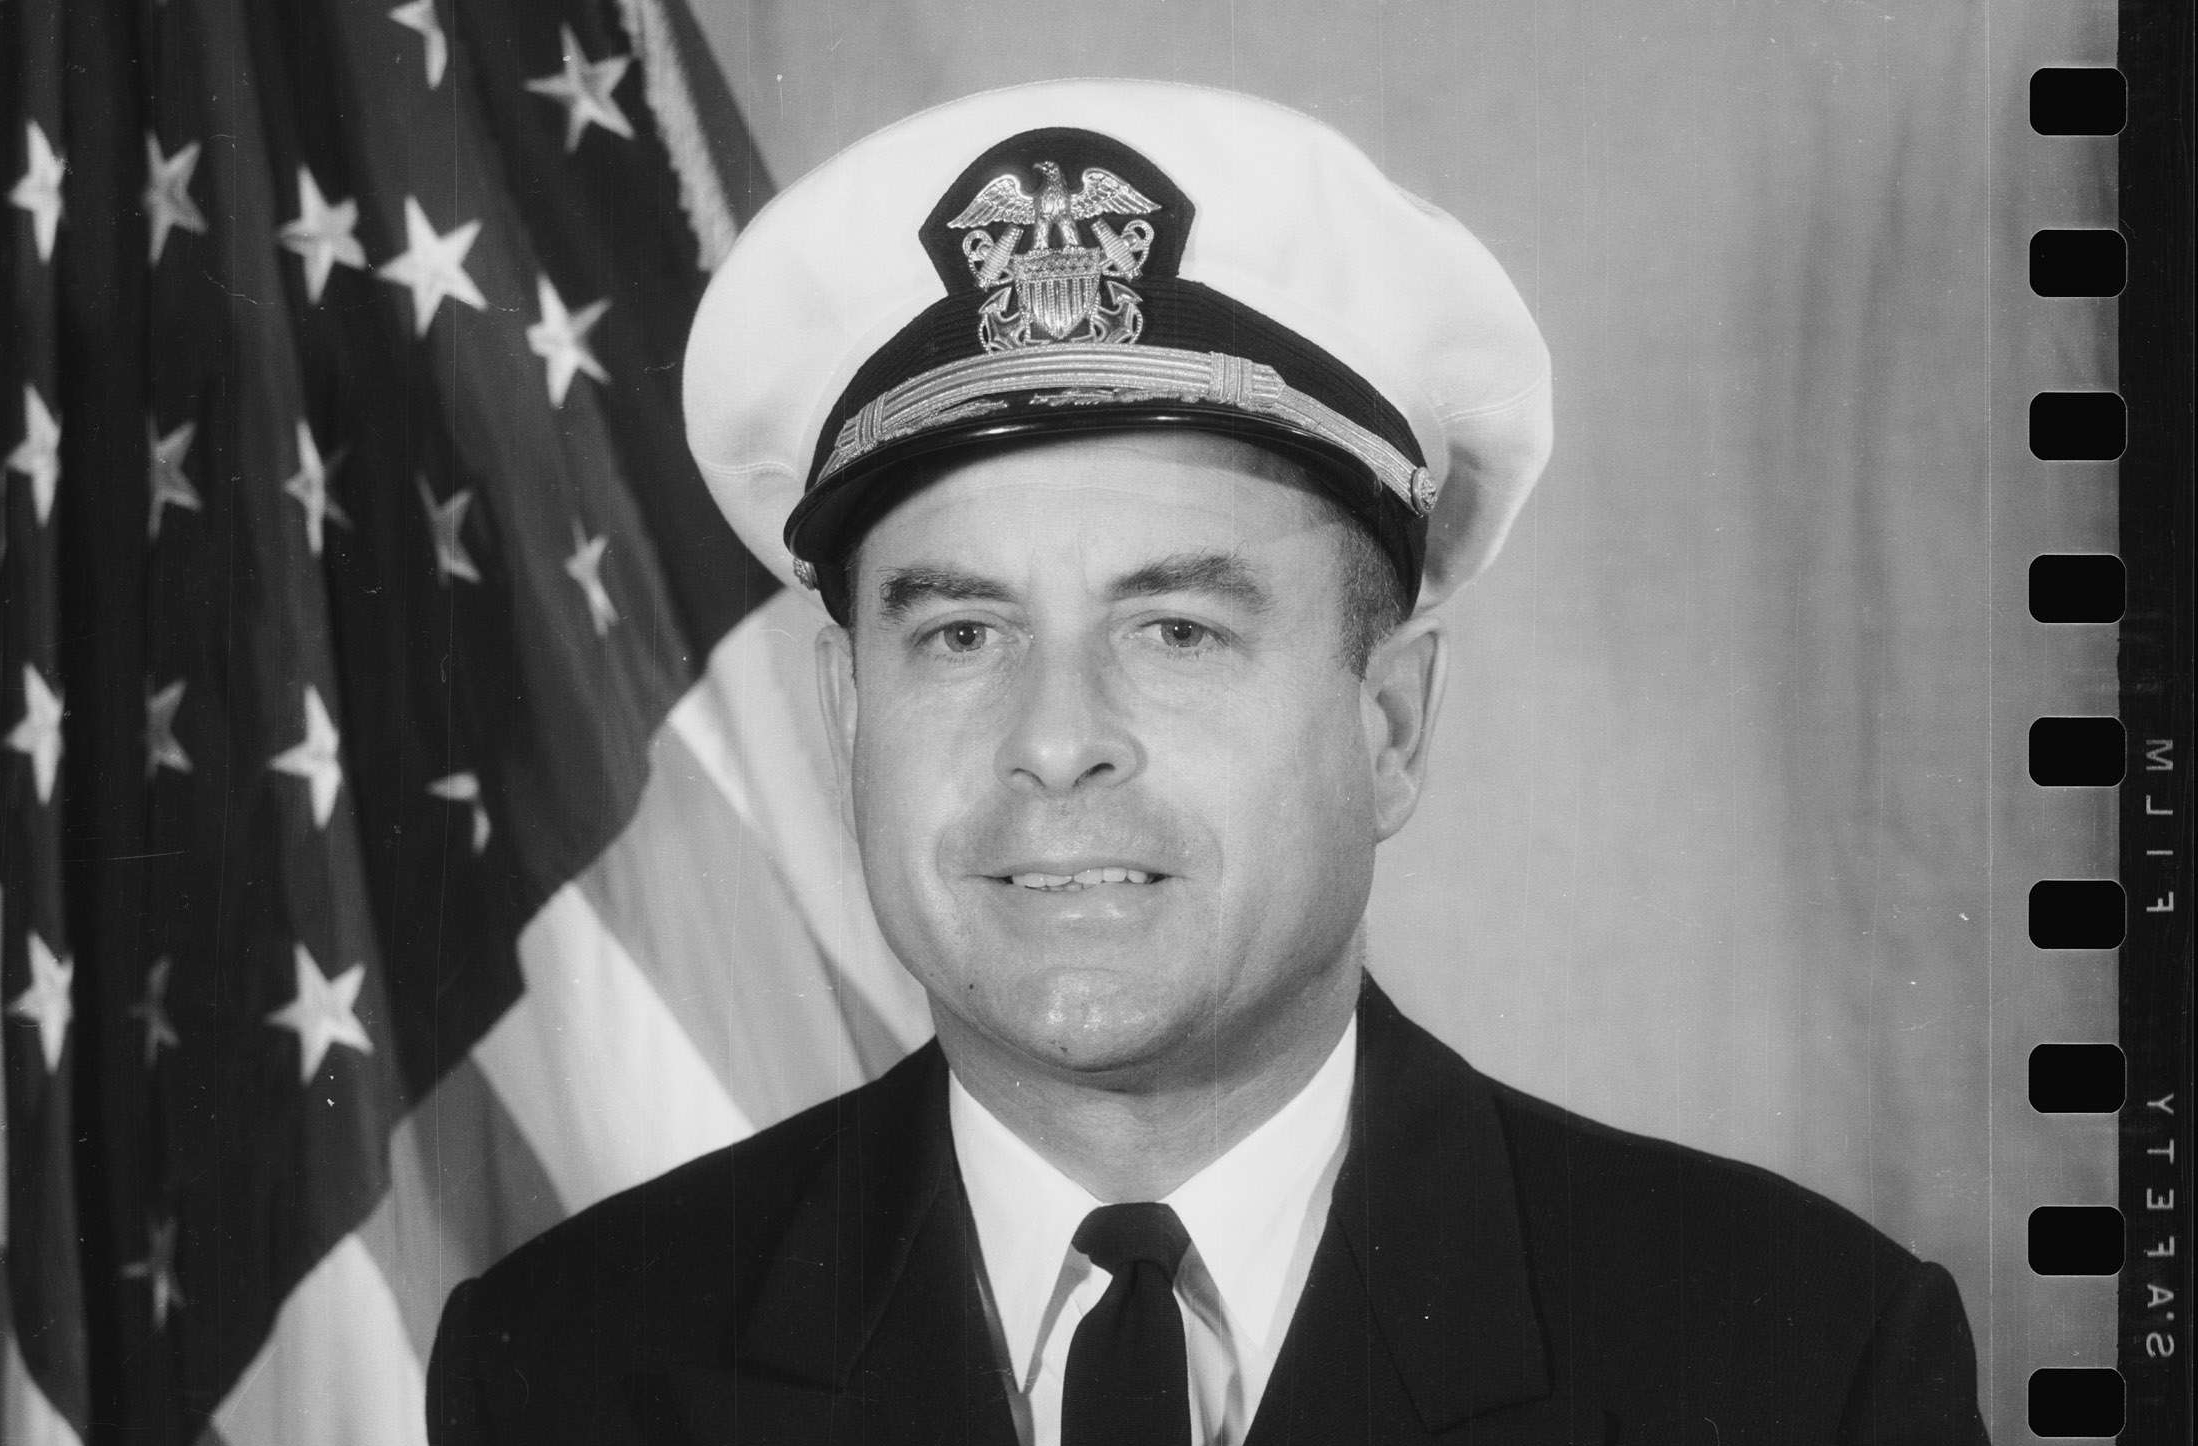 U.S. Navy Commander Jeremiah A. Denton, Jr.